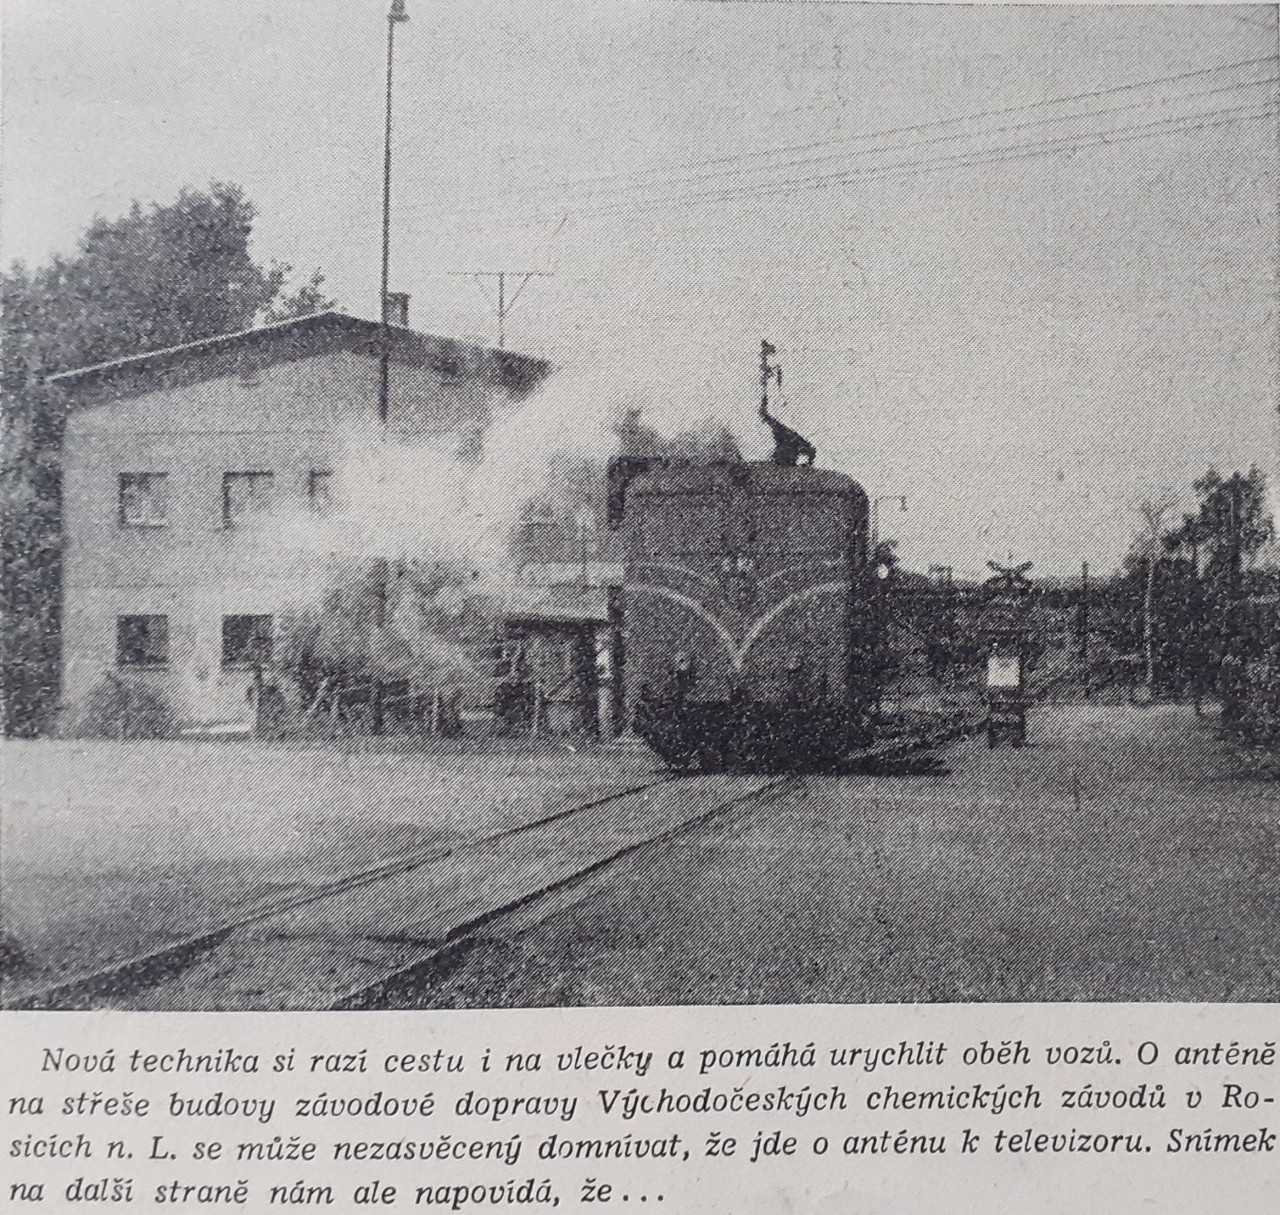 Vlekov pejezd v Semtn s neznmou lokomotivou - elezni 10/1959